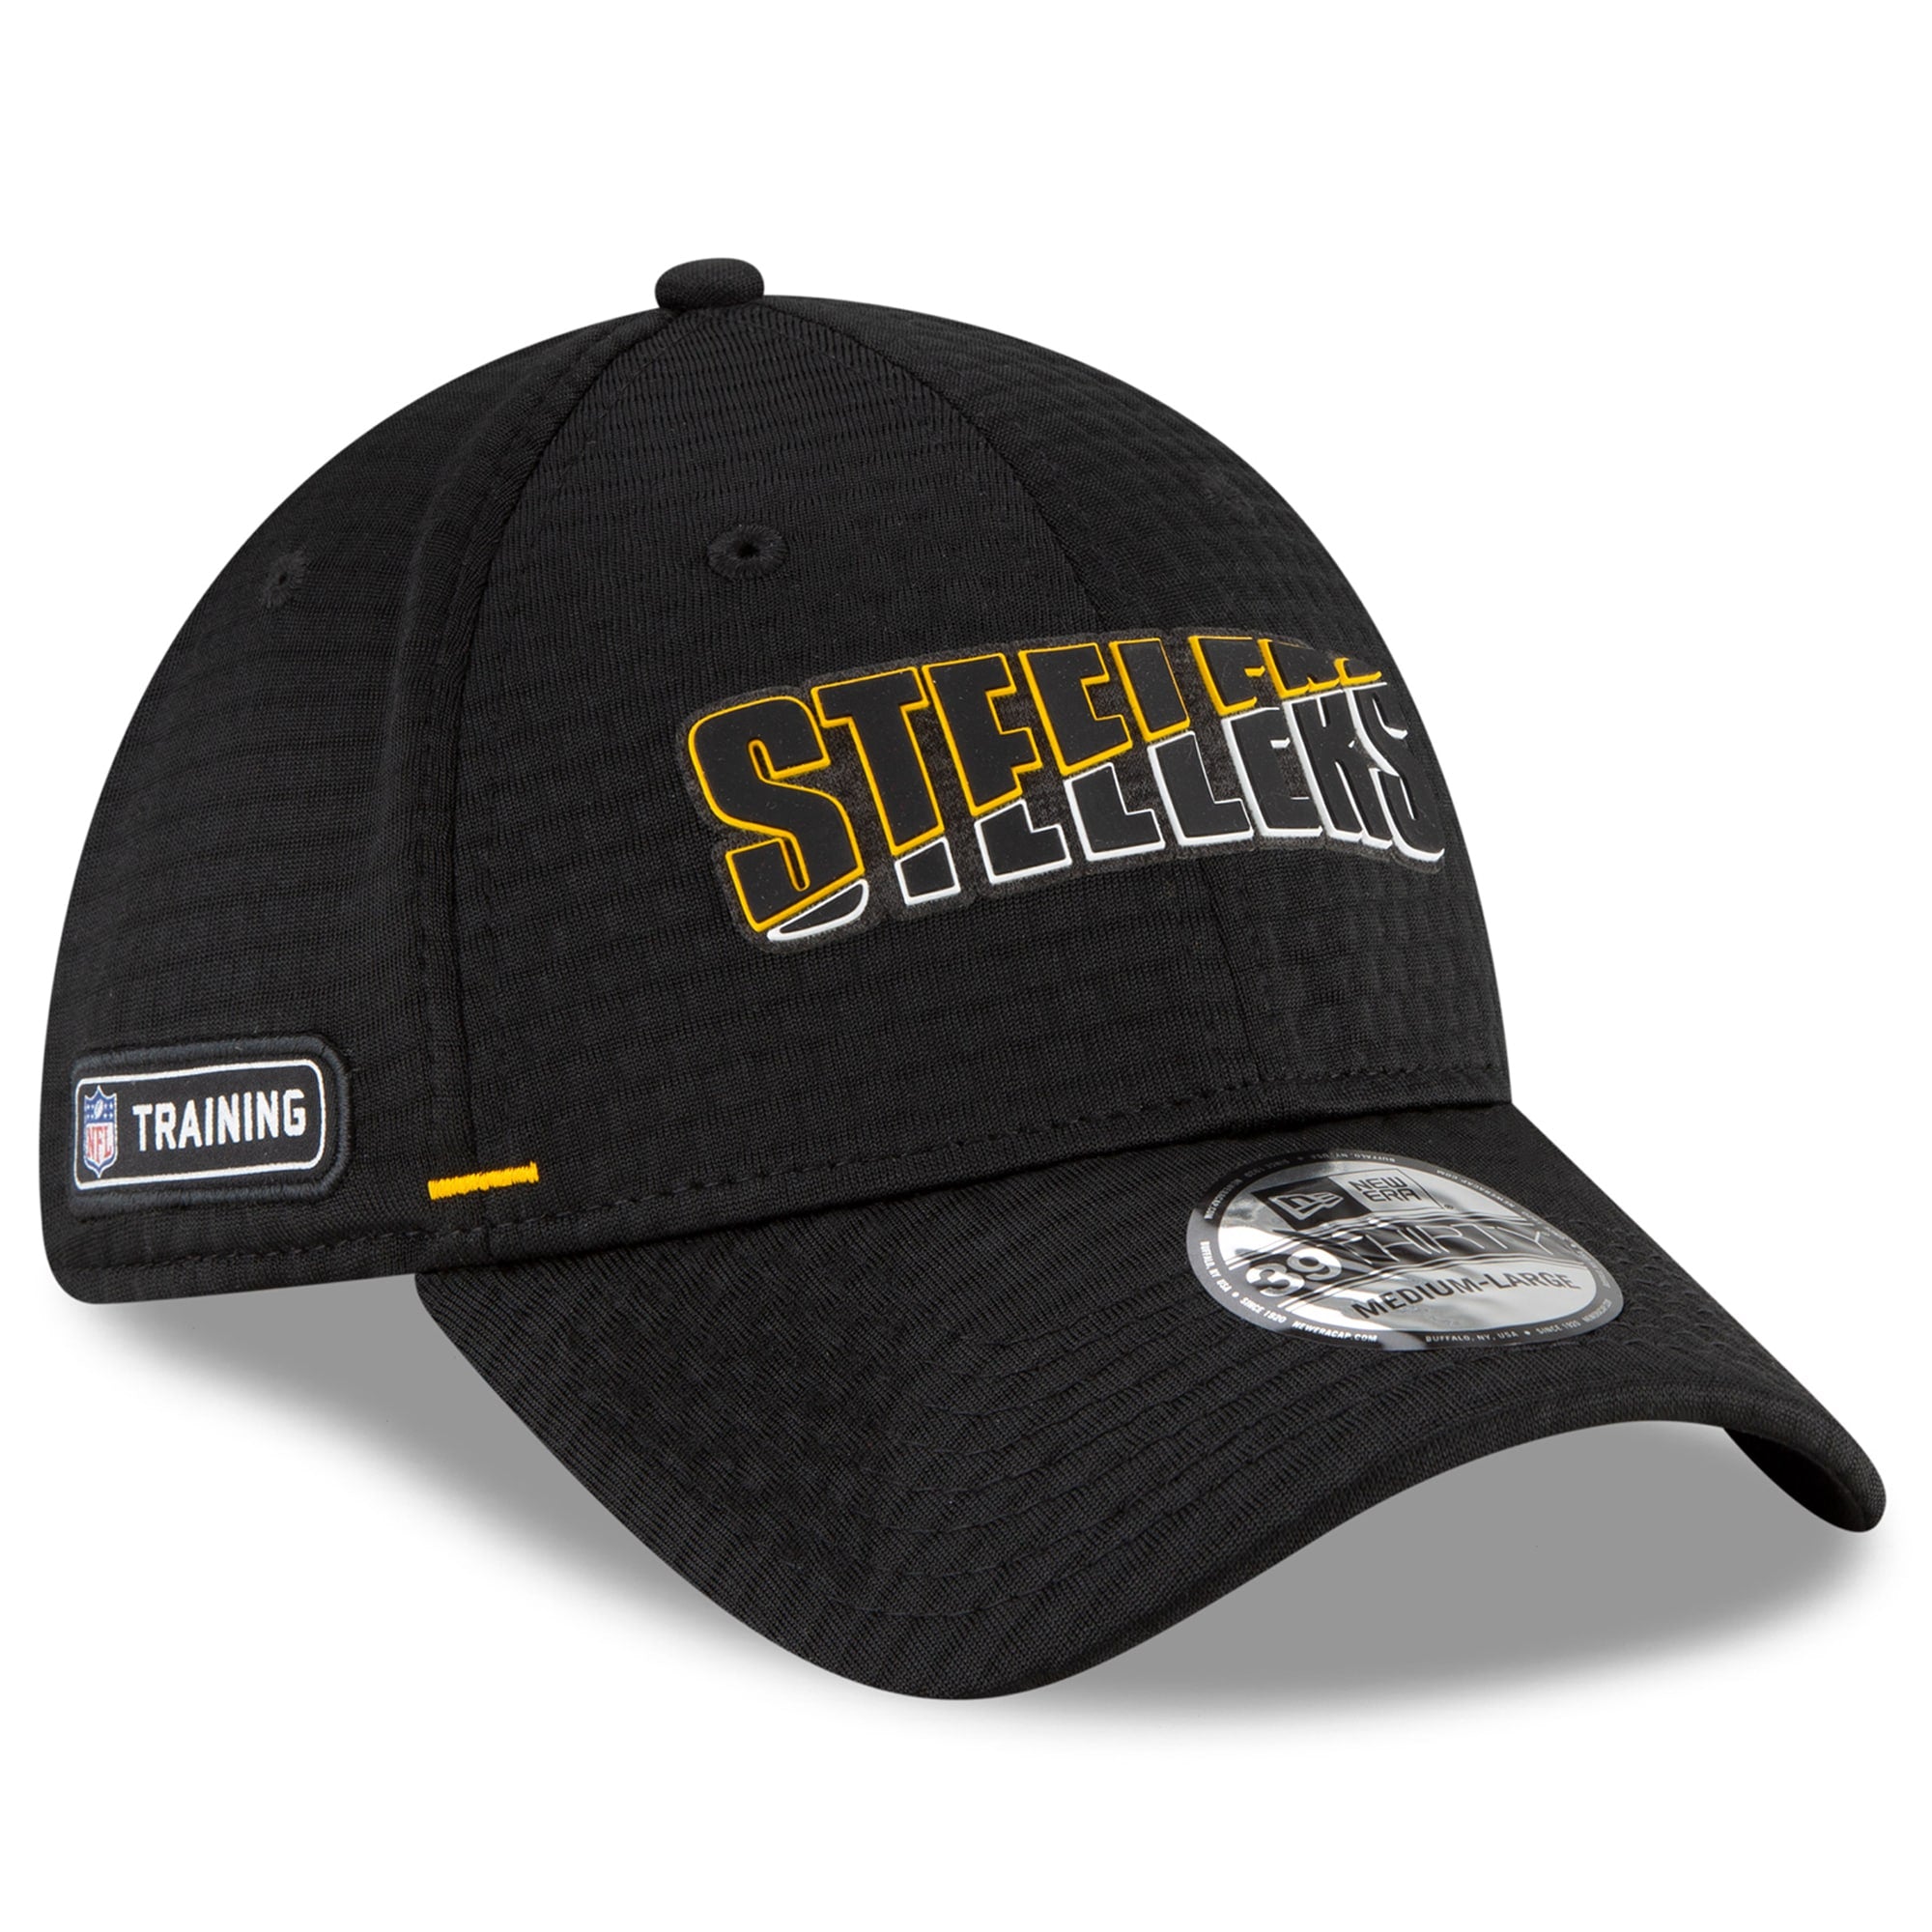 Pittsburgh Steelers New Era Bucket Sideline Training Hat